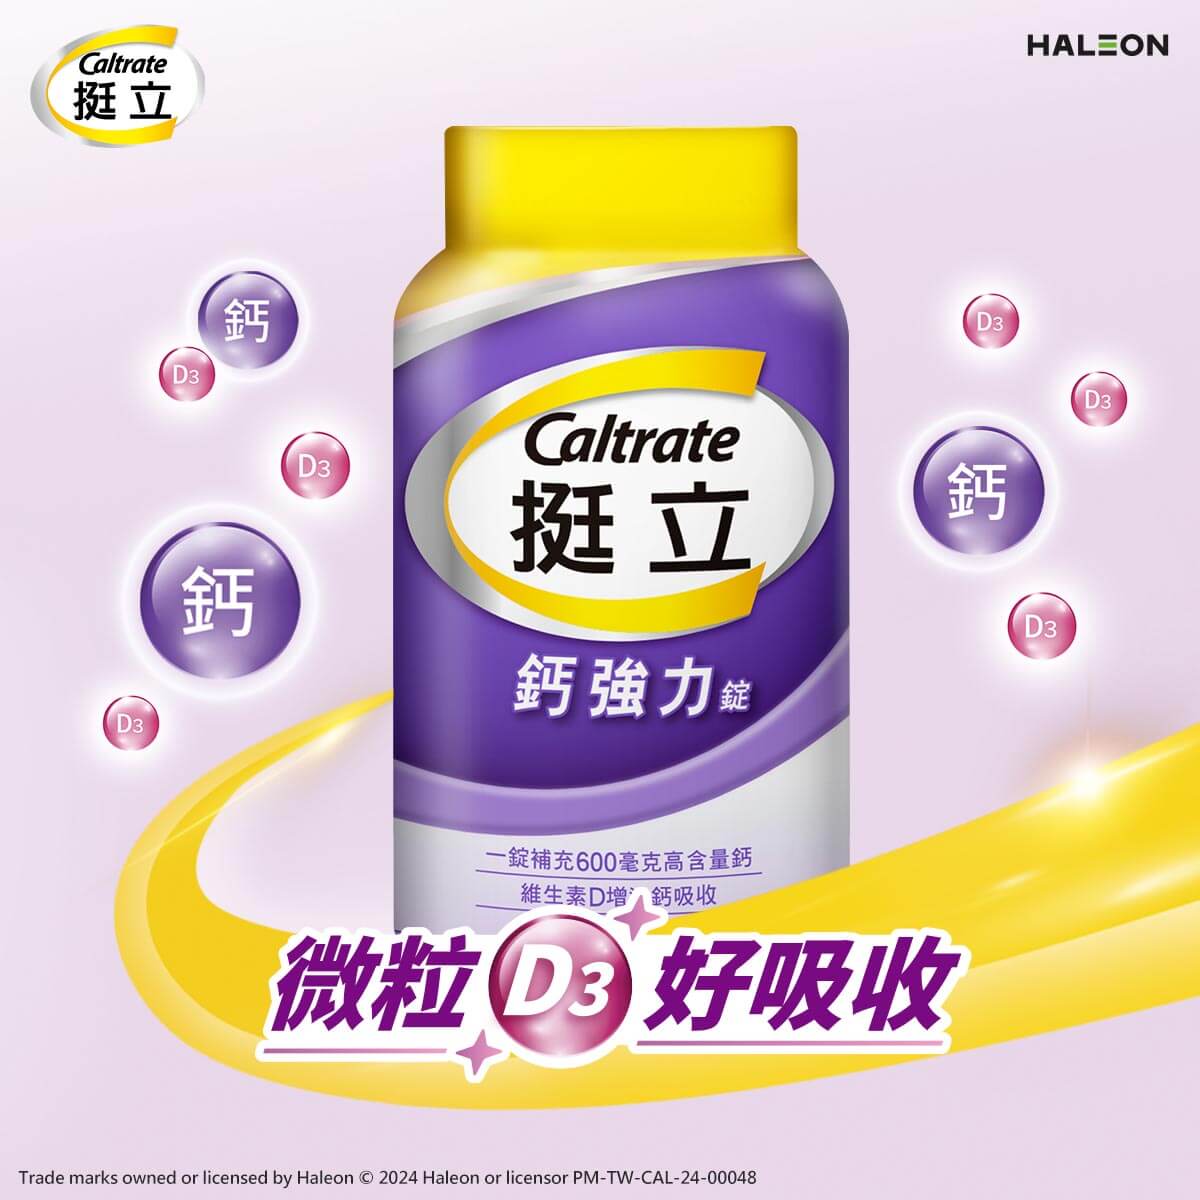 Caltrate 挺立微粒D3好吸收,有助於維持神經、肌肉的正常生理,更有鎂、鋅、銅、錳營養素 保護更完整